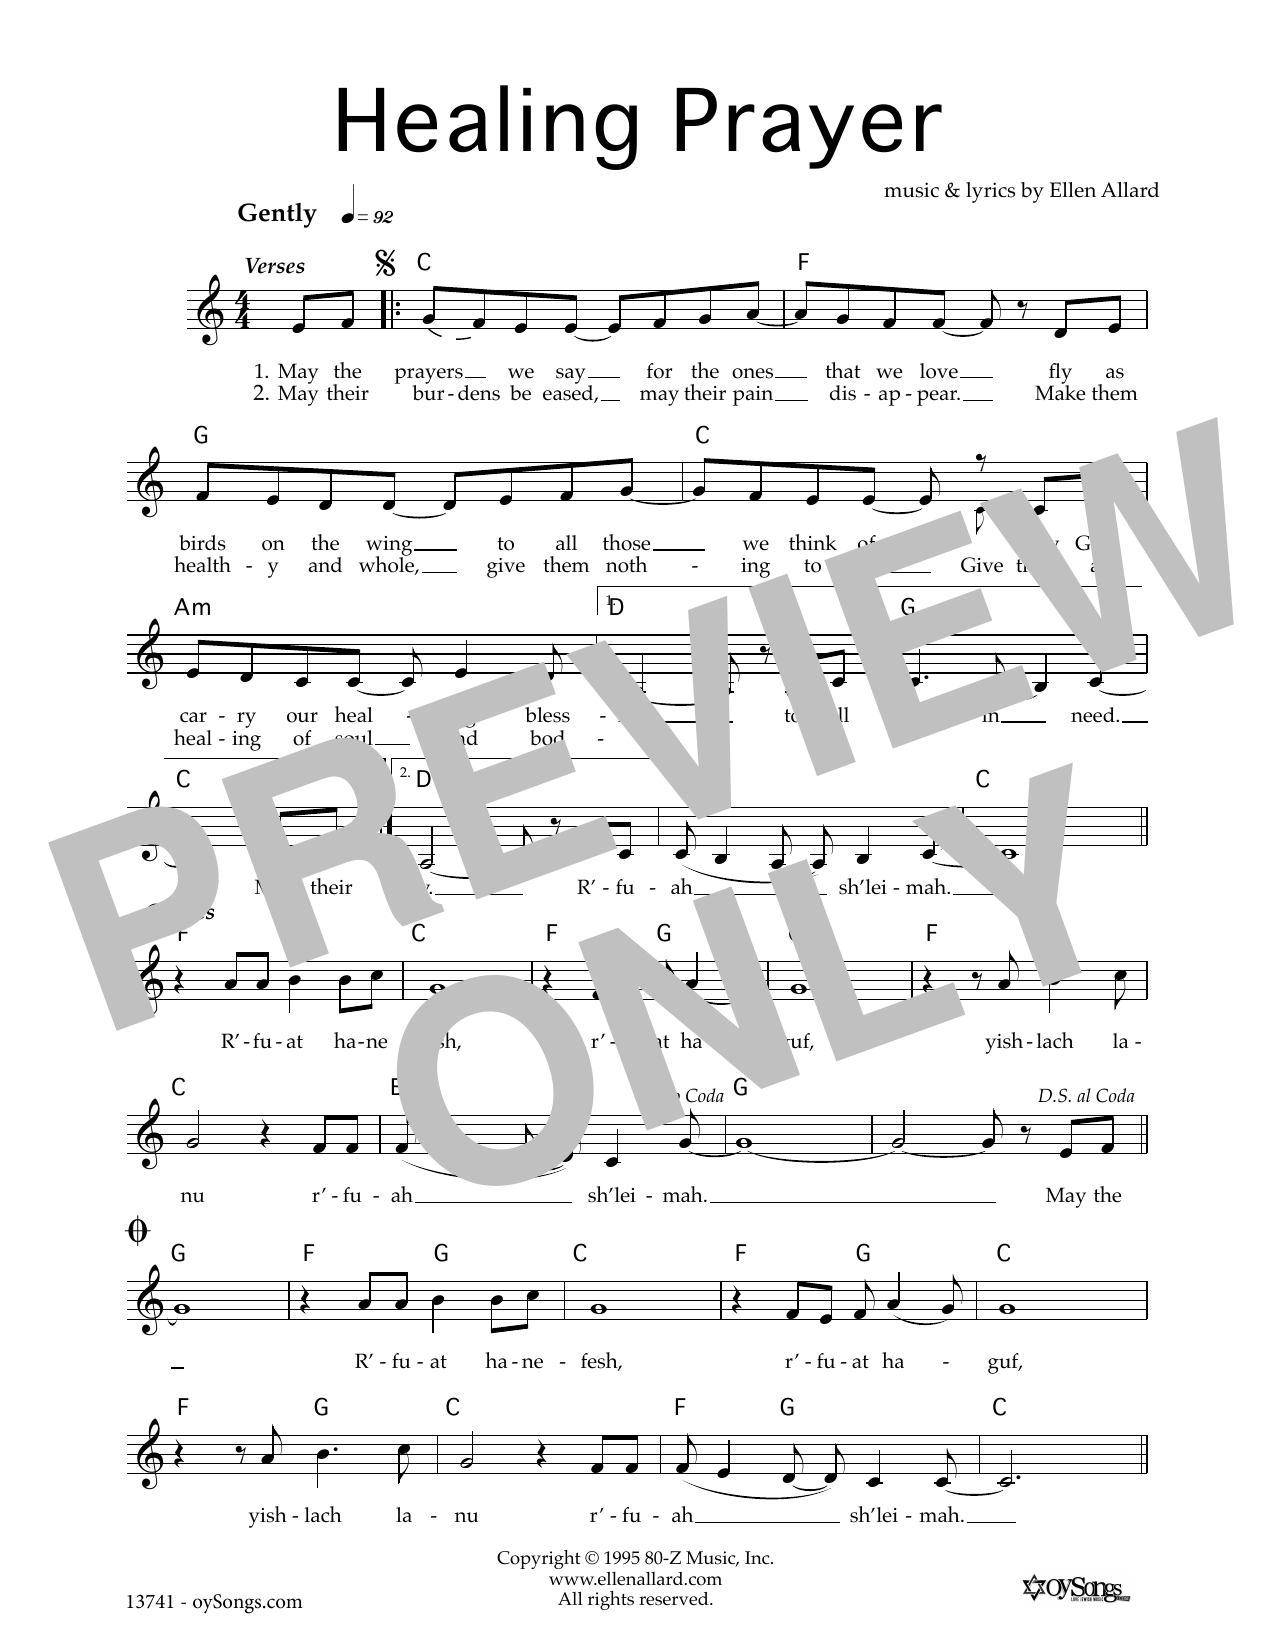 Ellen Allard Healing Prayer Sheet Music Notes & Chords for Melody Line, Lyrics & Chords - Download or Print PDF